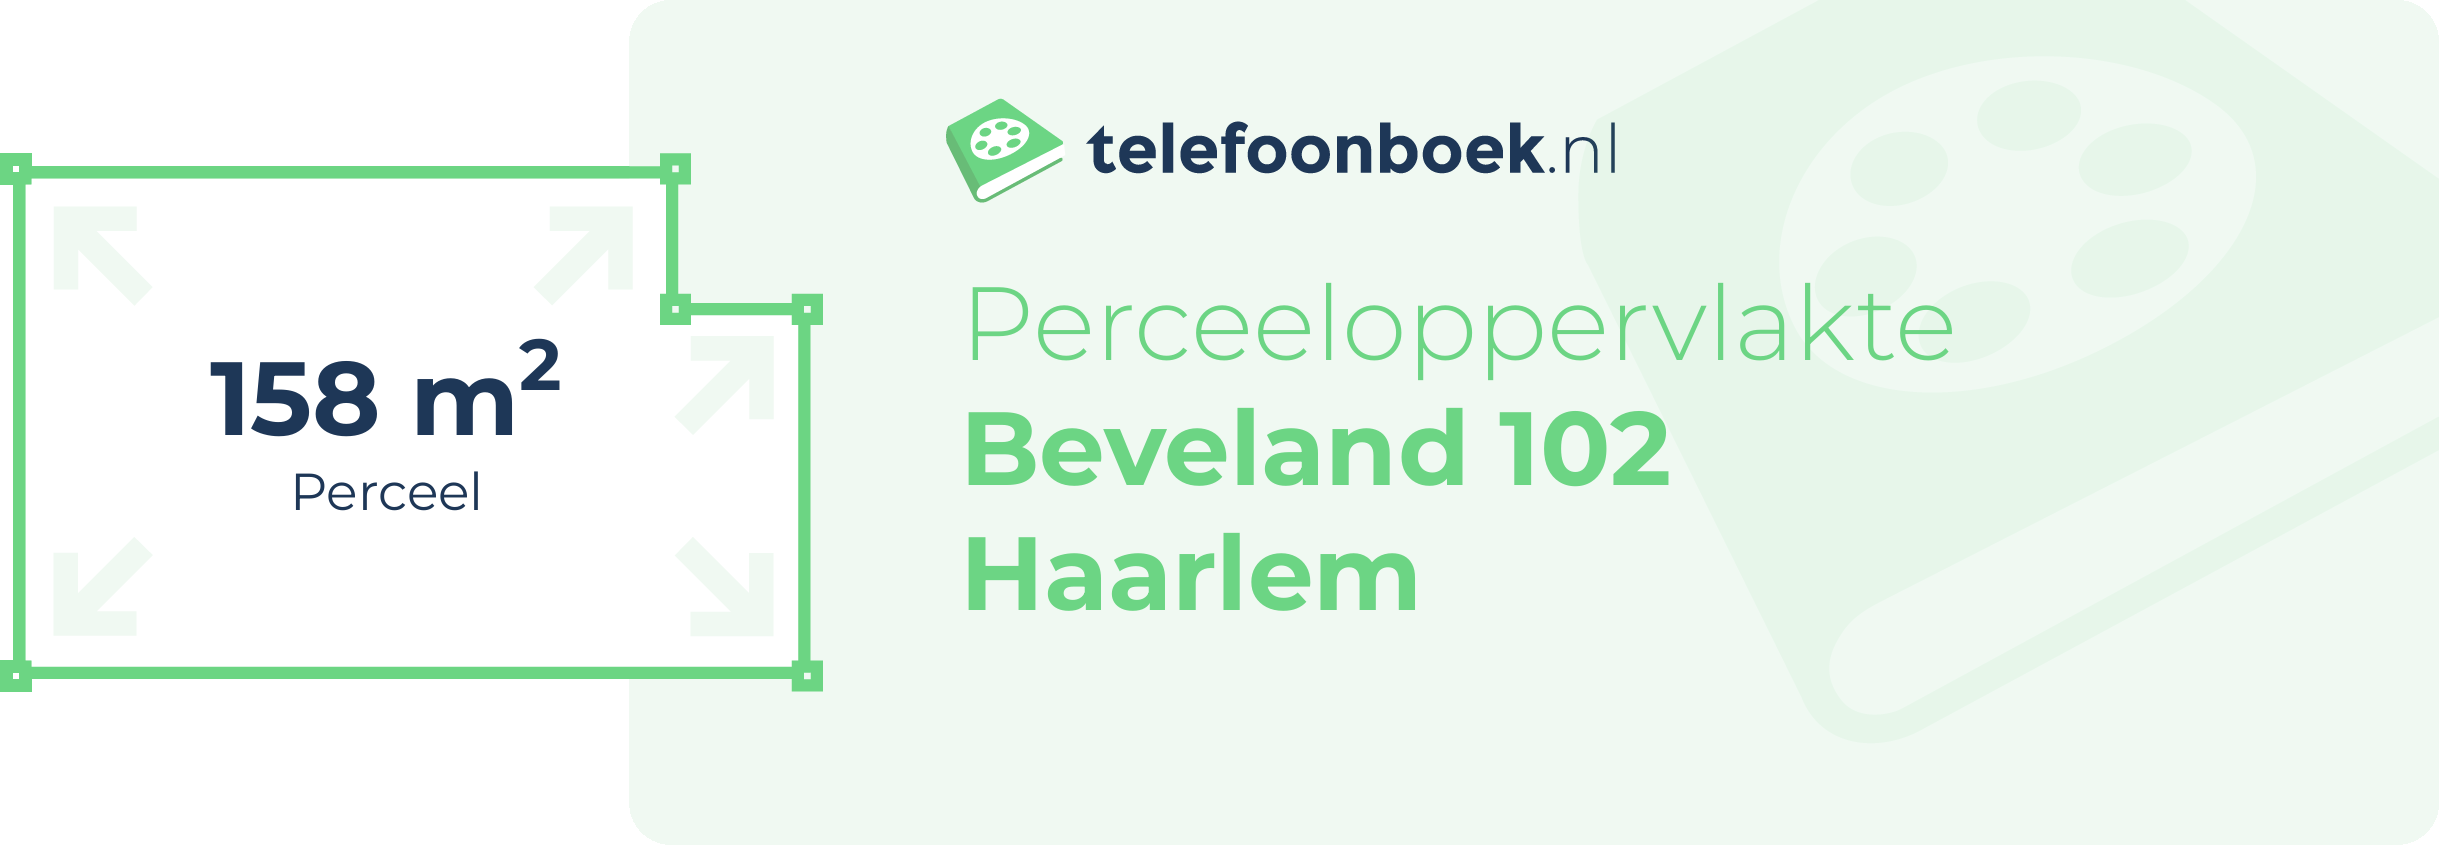 Perceeloppervlakte Beveland 102 Haarlem